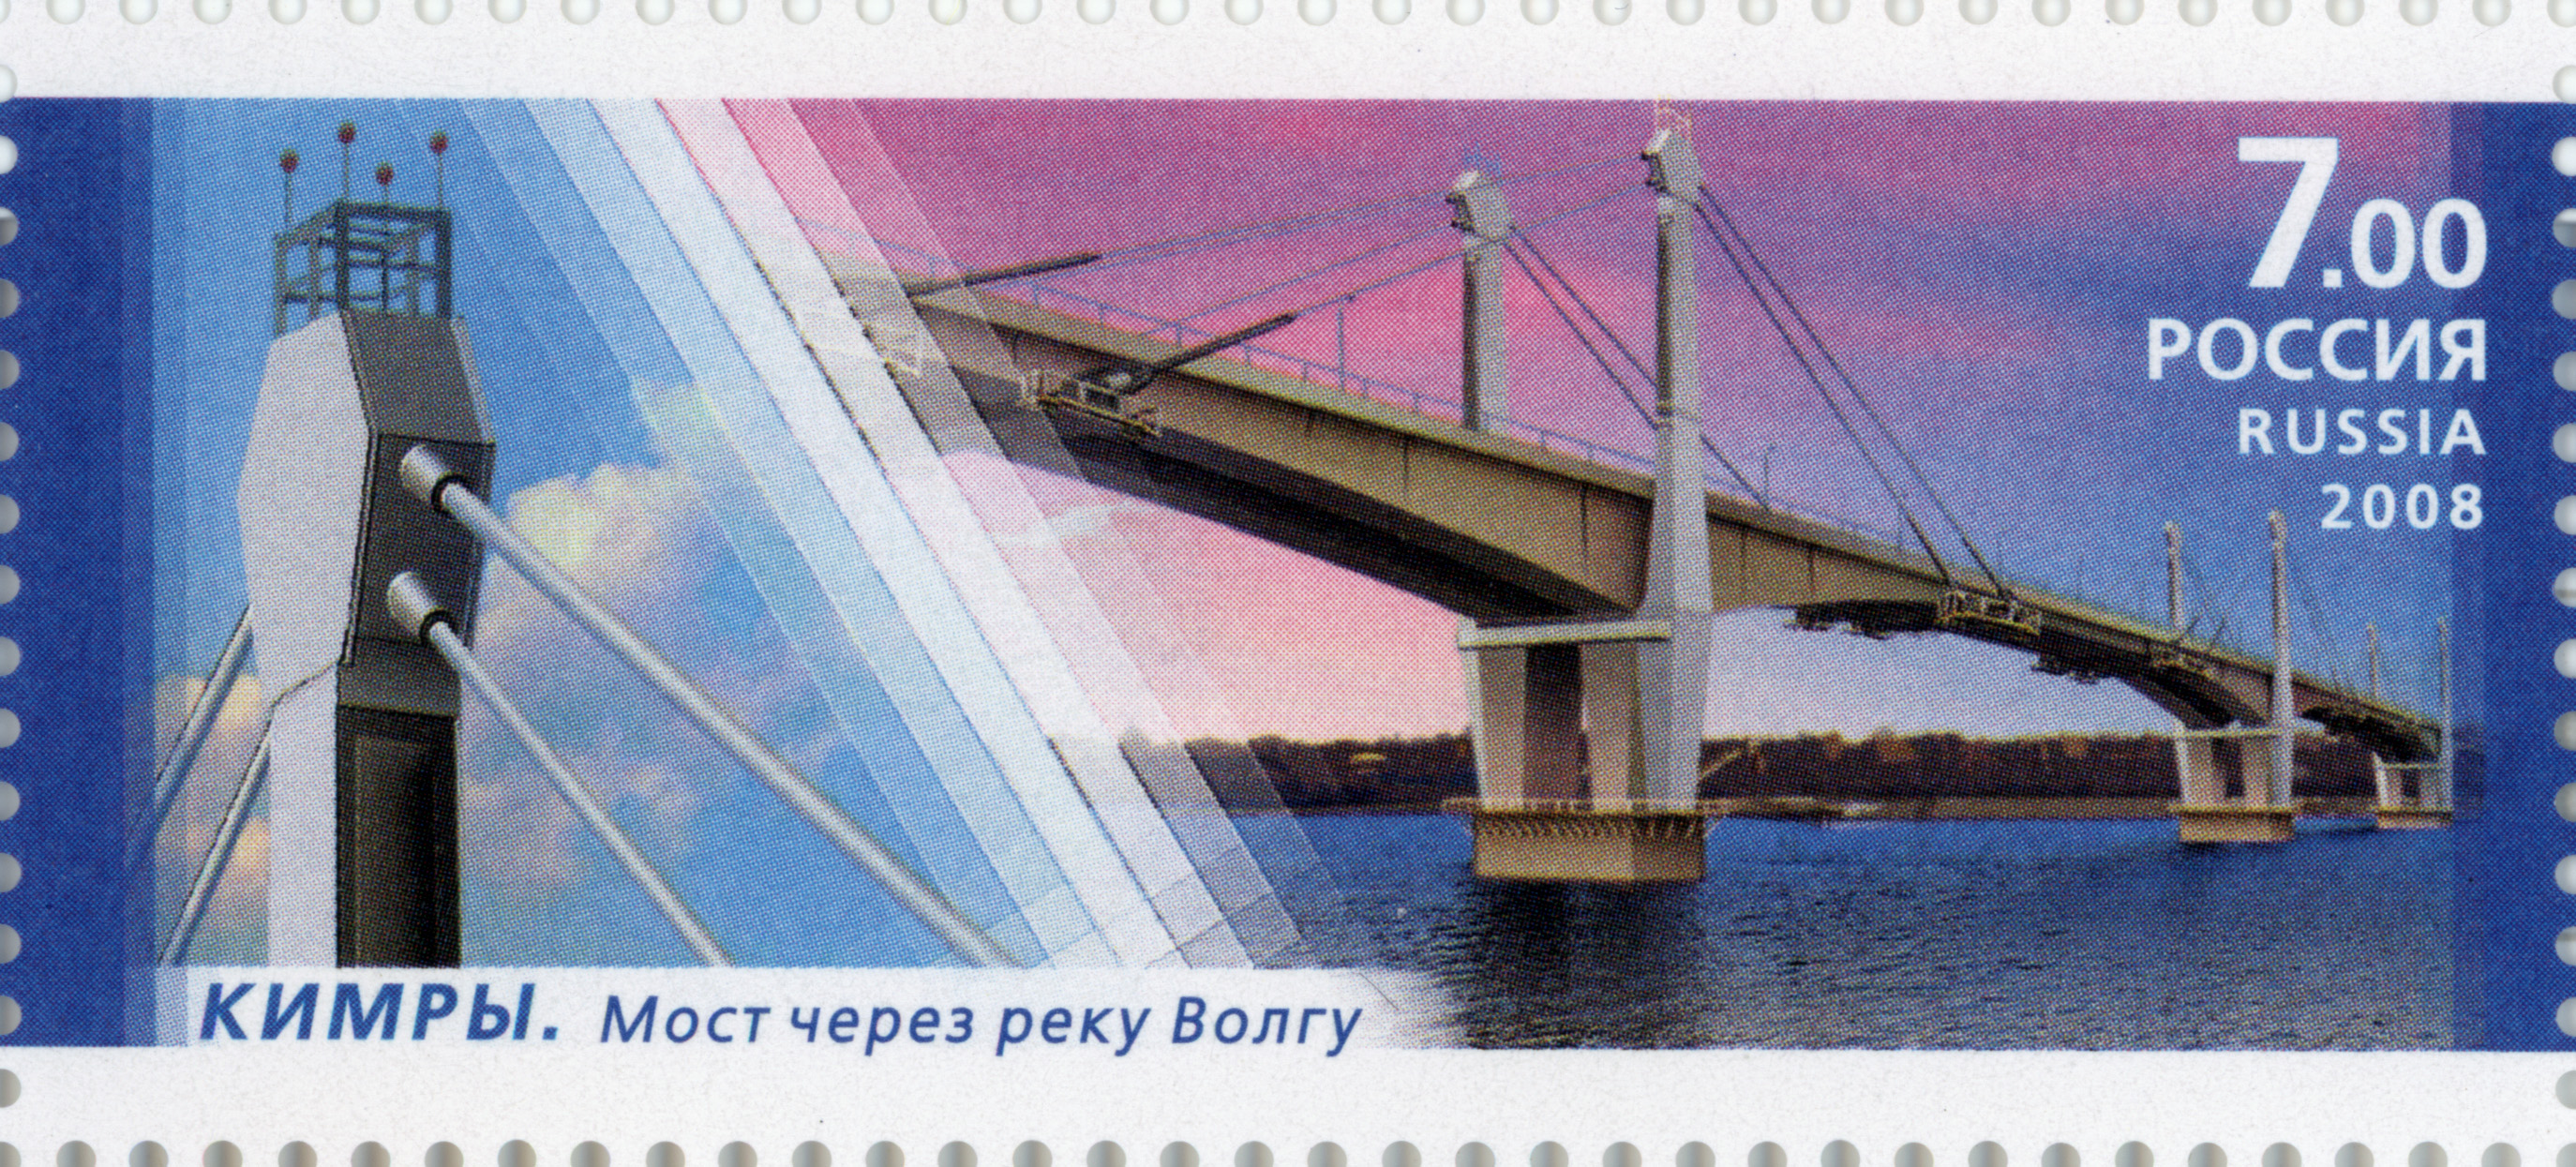 2008 Stamp of Russia. Kimry. Bridge over Volga river